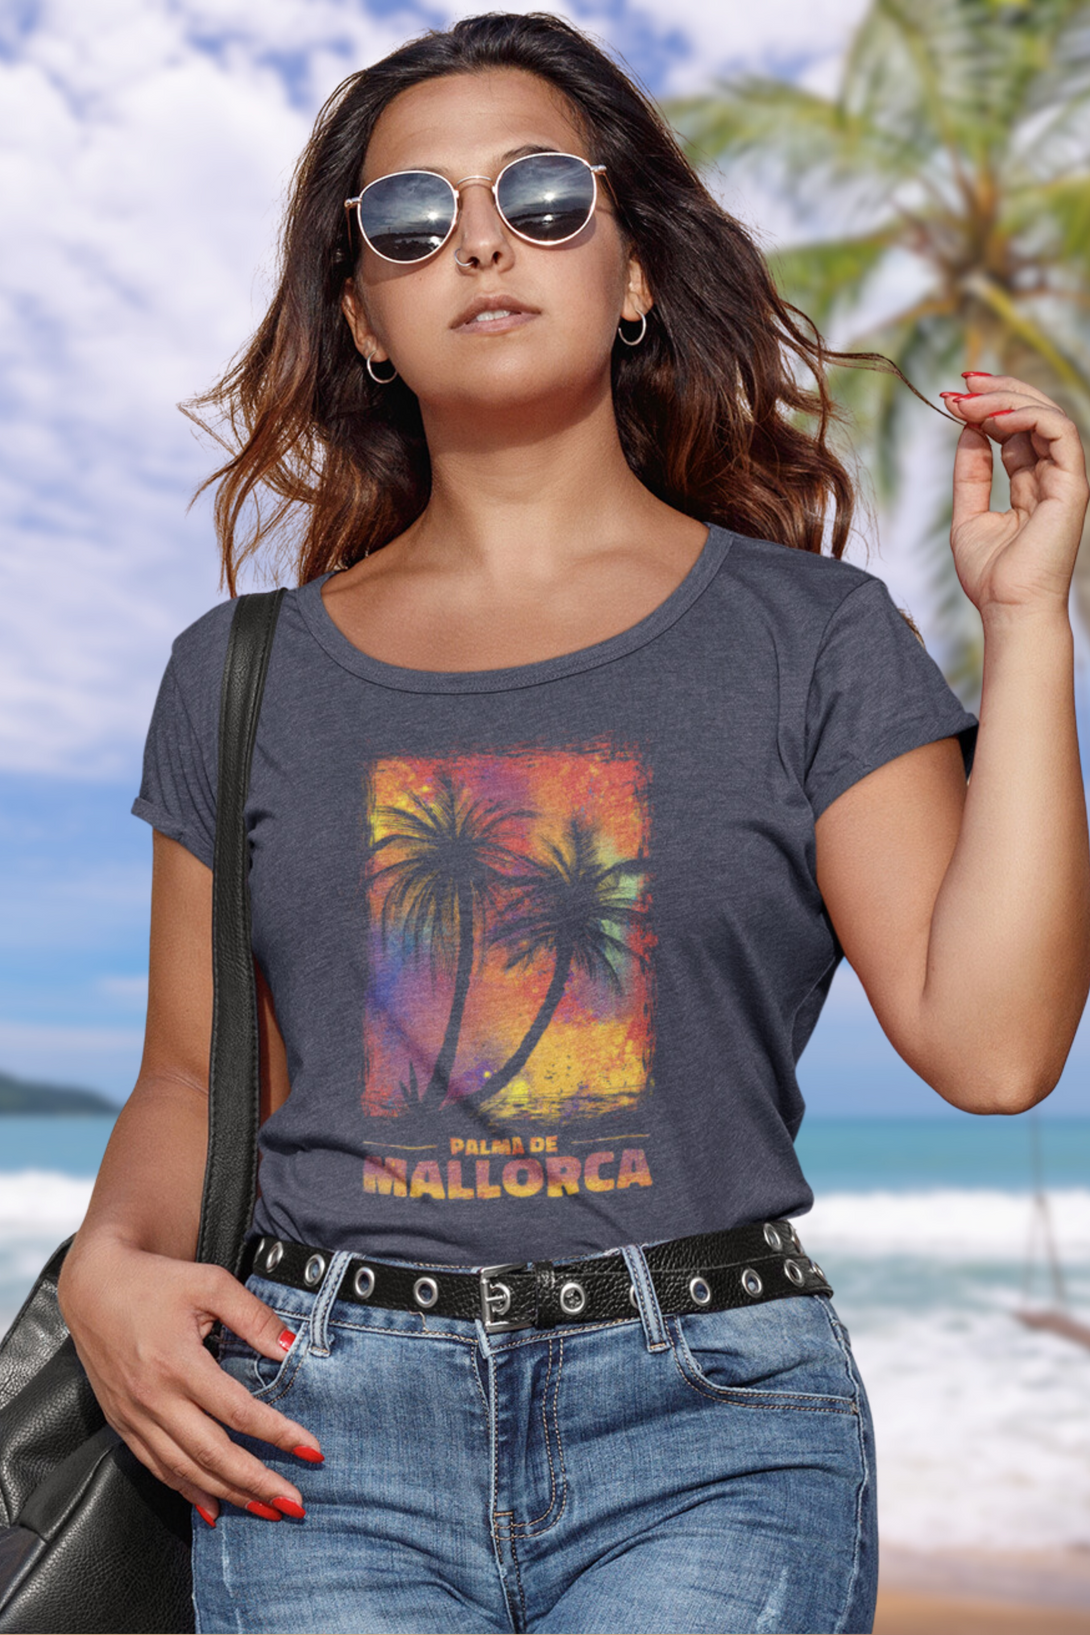 Palma De Mallorca Printed Scoop Neck T-Shirt For Women - WowWaves - 6